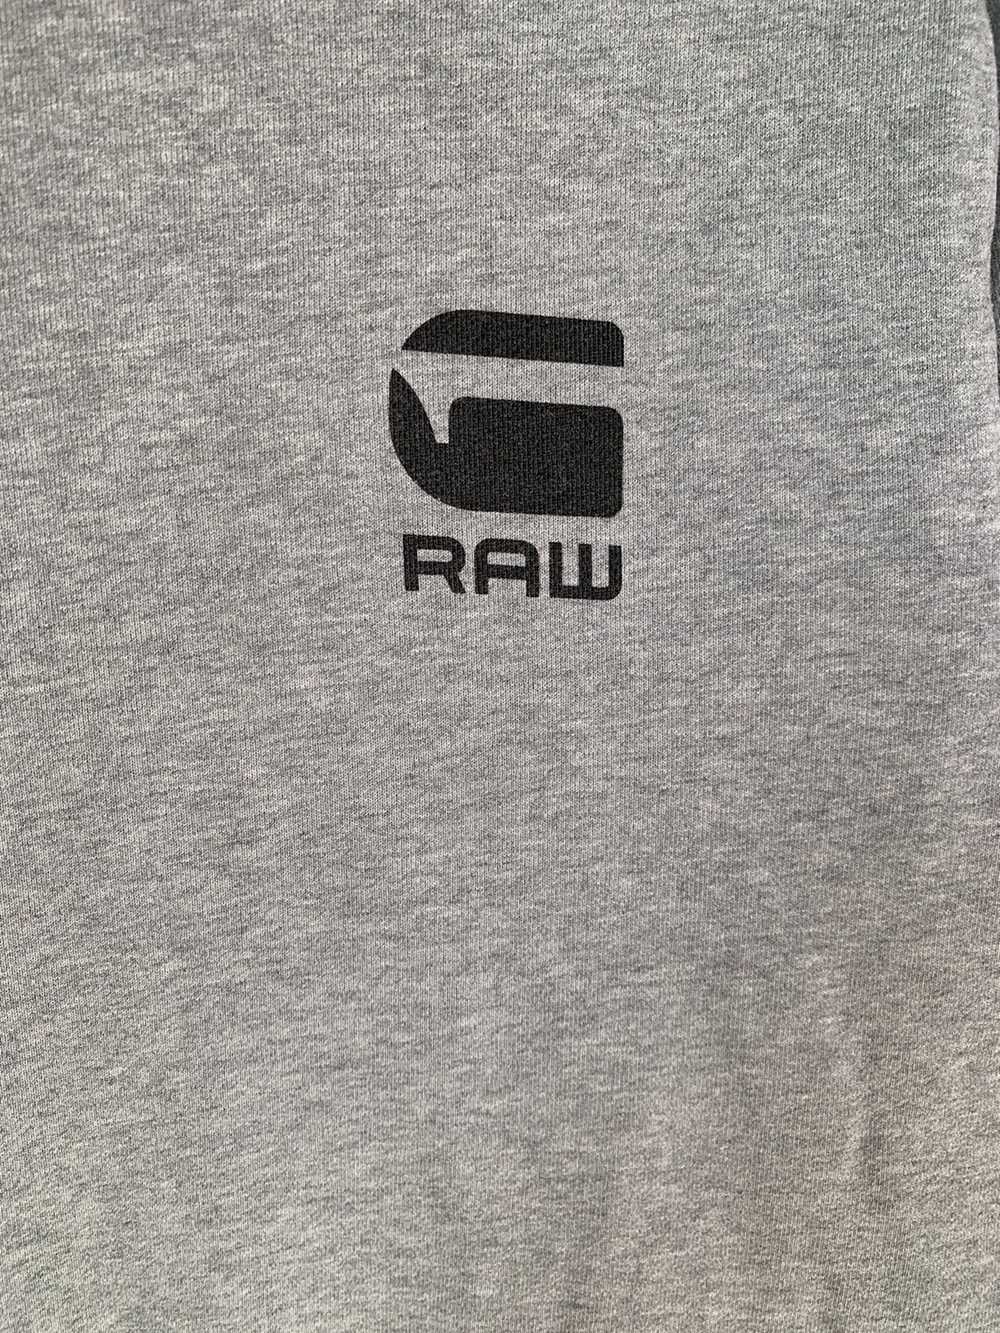 G Star Raw × Gstar G-Star RAW sweatshirt - image 2